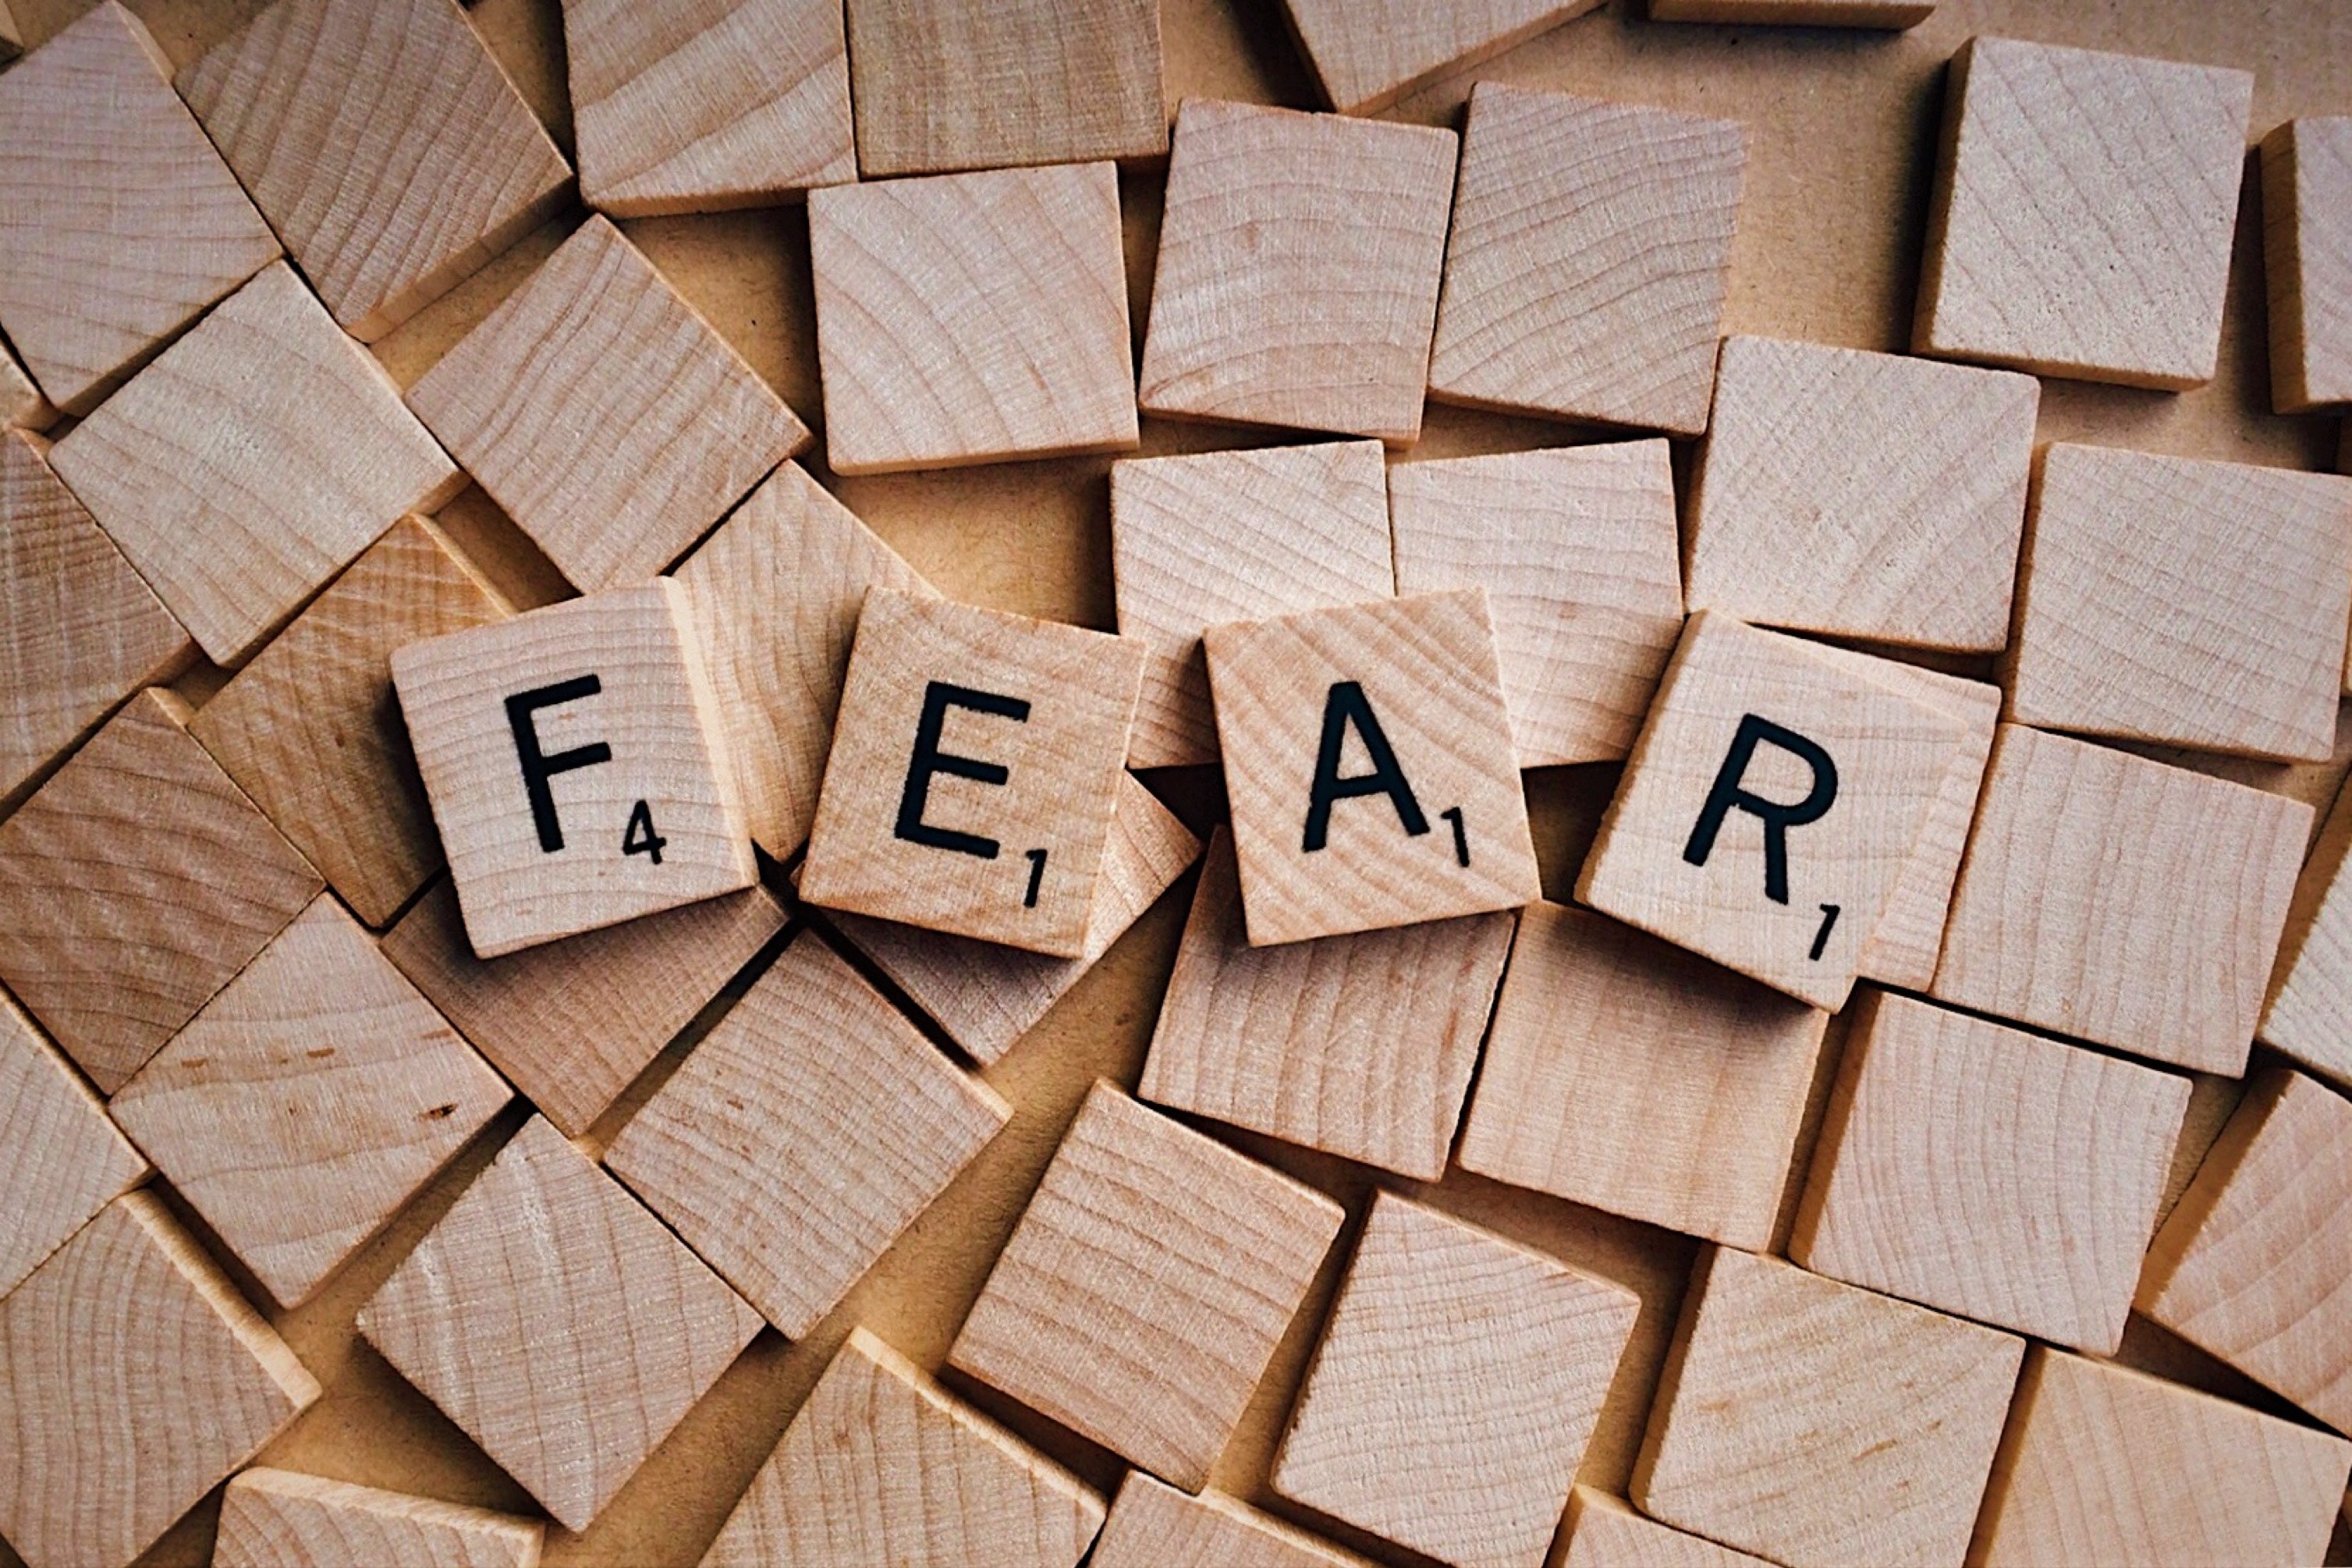 Facing Fears Seeking Solutions